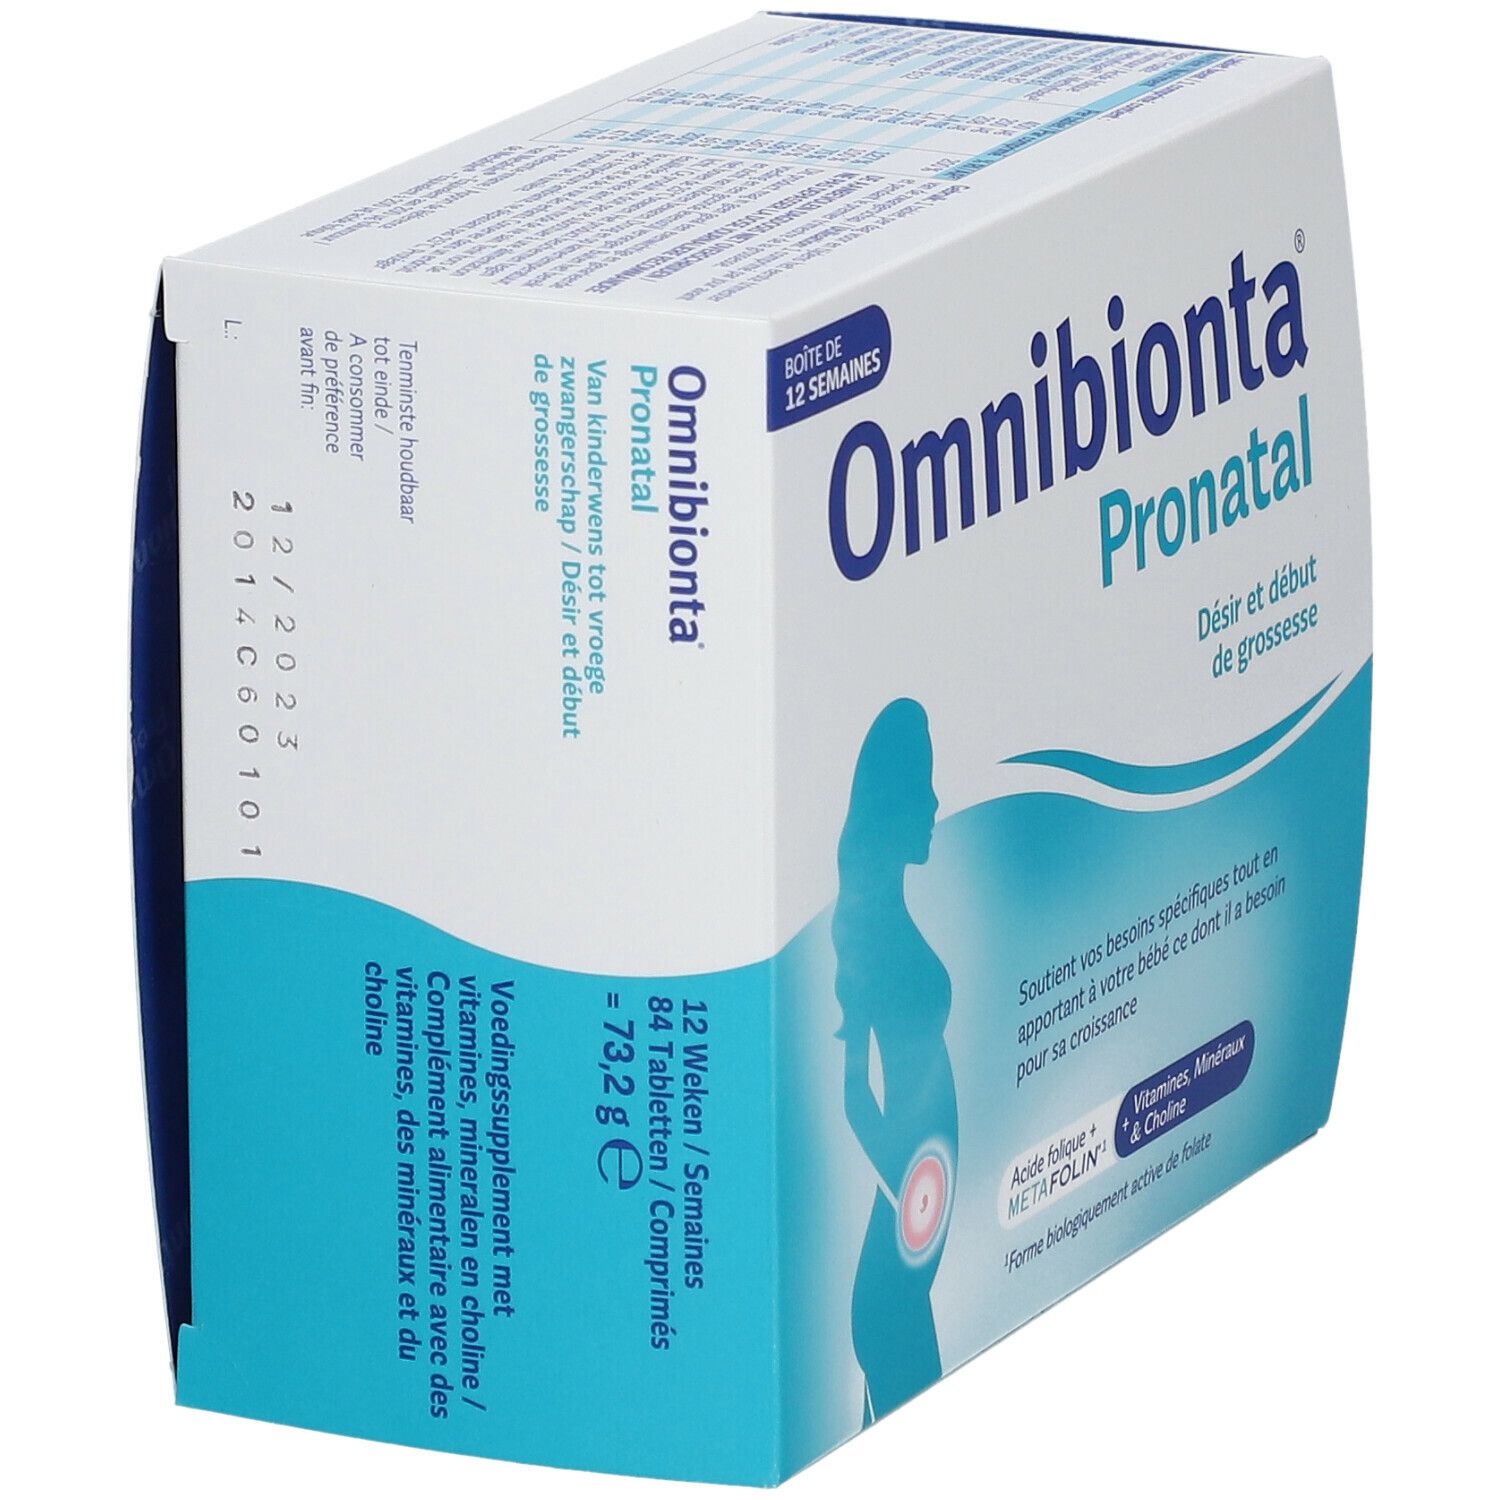 Omnibionta® Pronatal Metafolin®